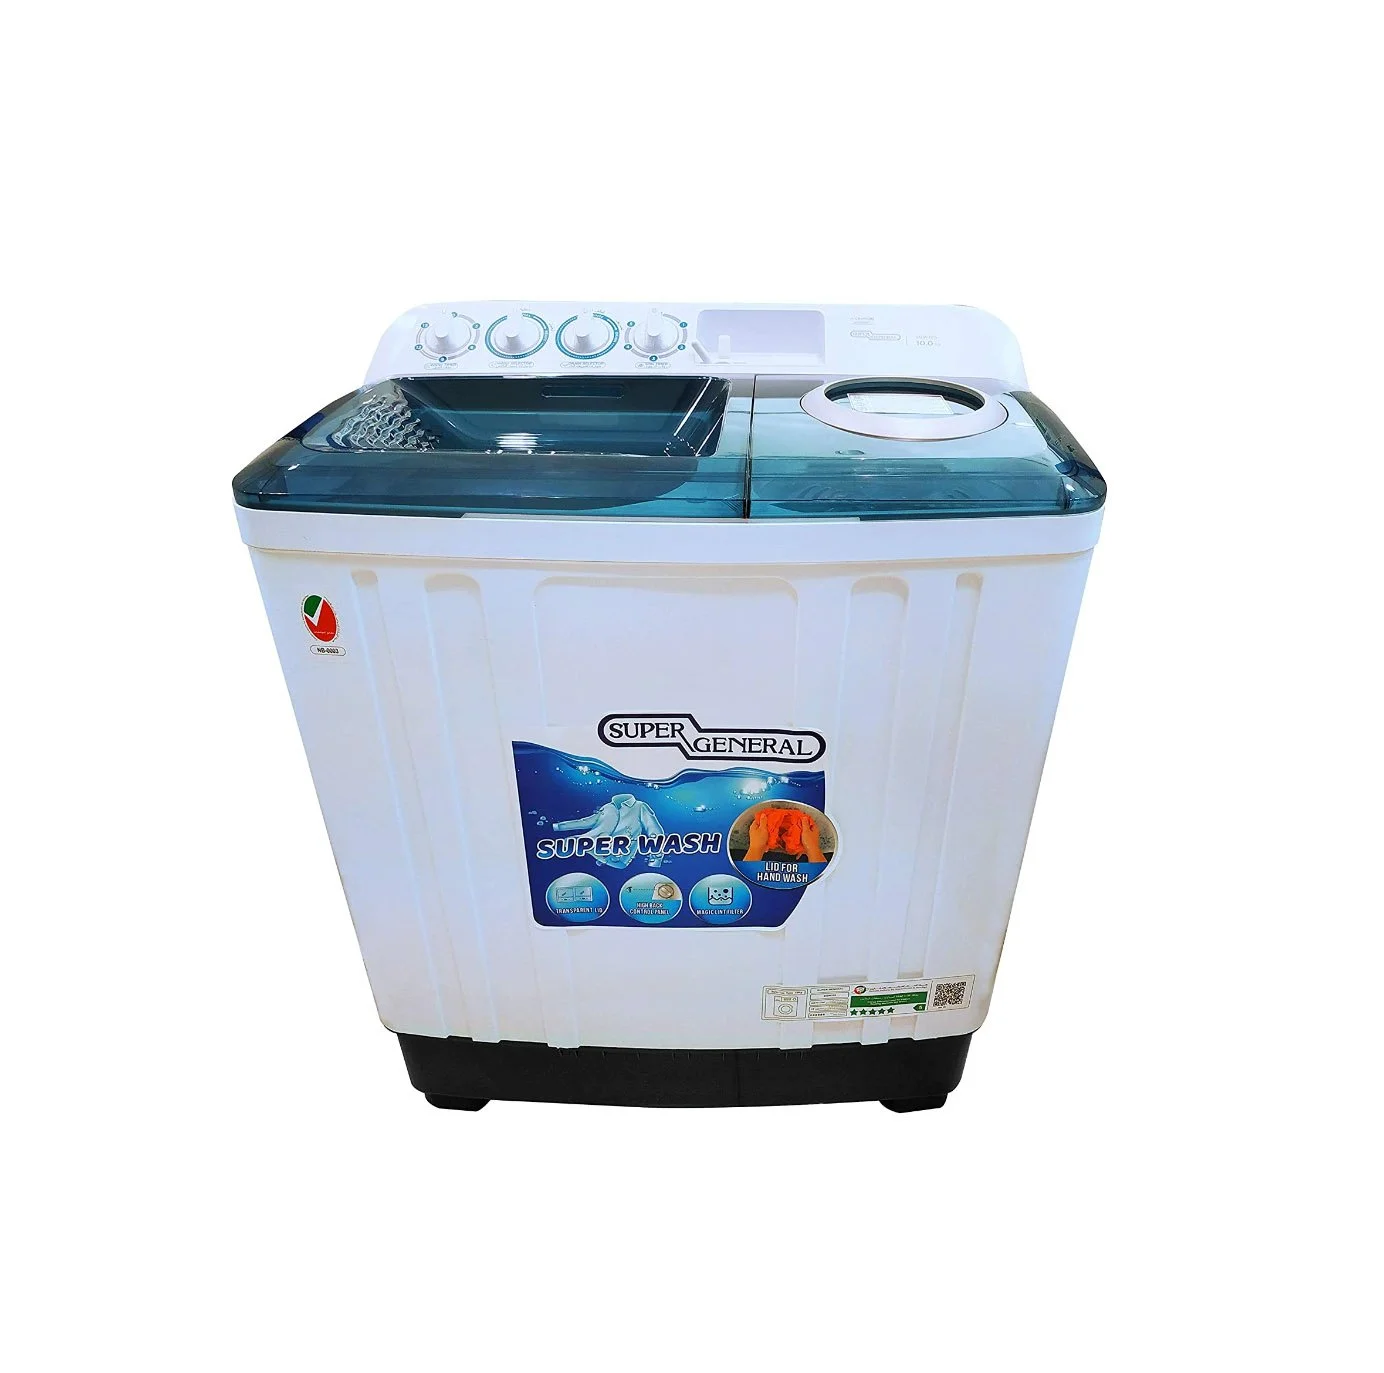 Super General 12 Kg Twin Tub Washing Machine Color White Model – SGW125 – 1 Year Brand Warranty.